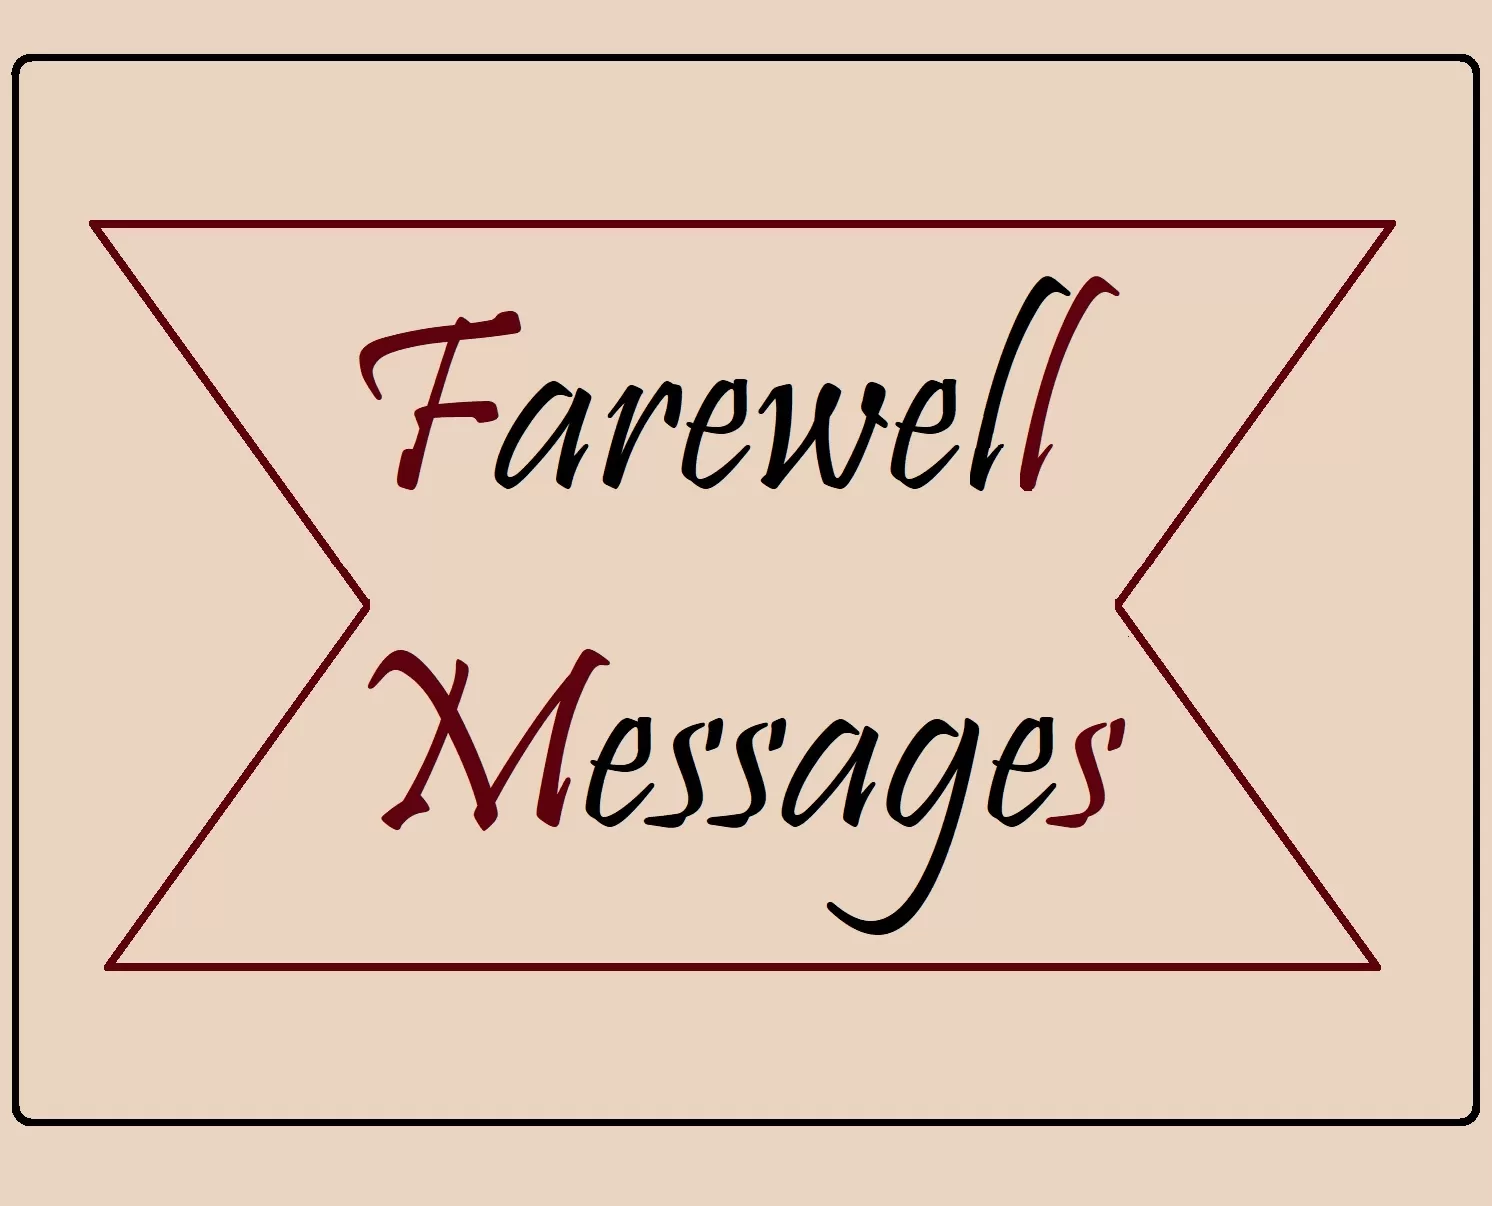 Farewell Messages Template